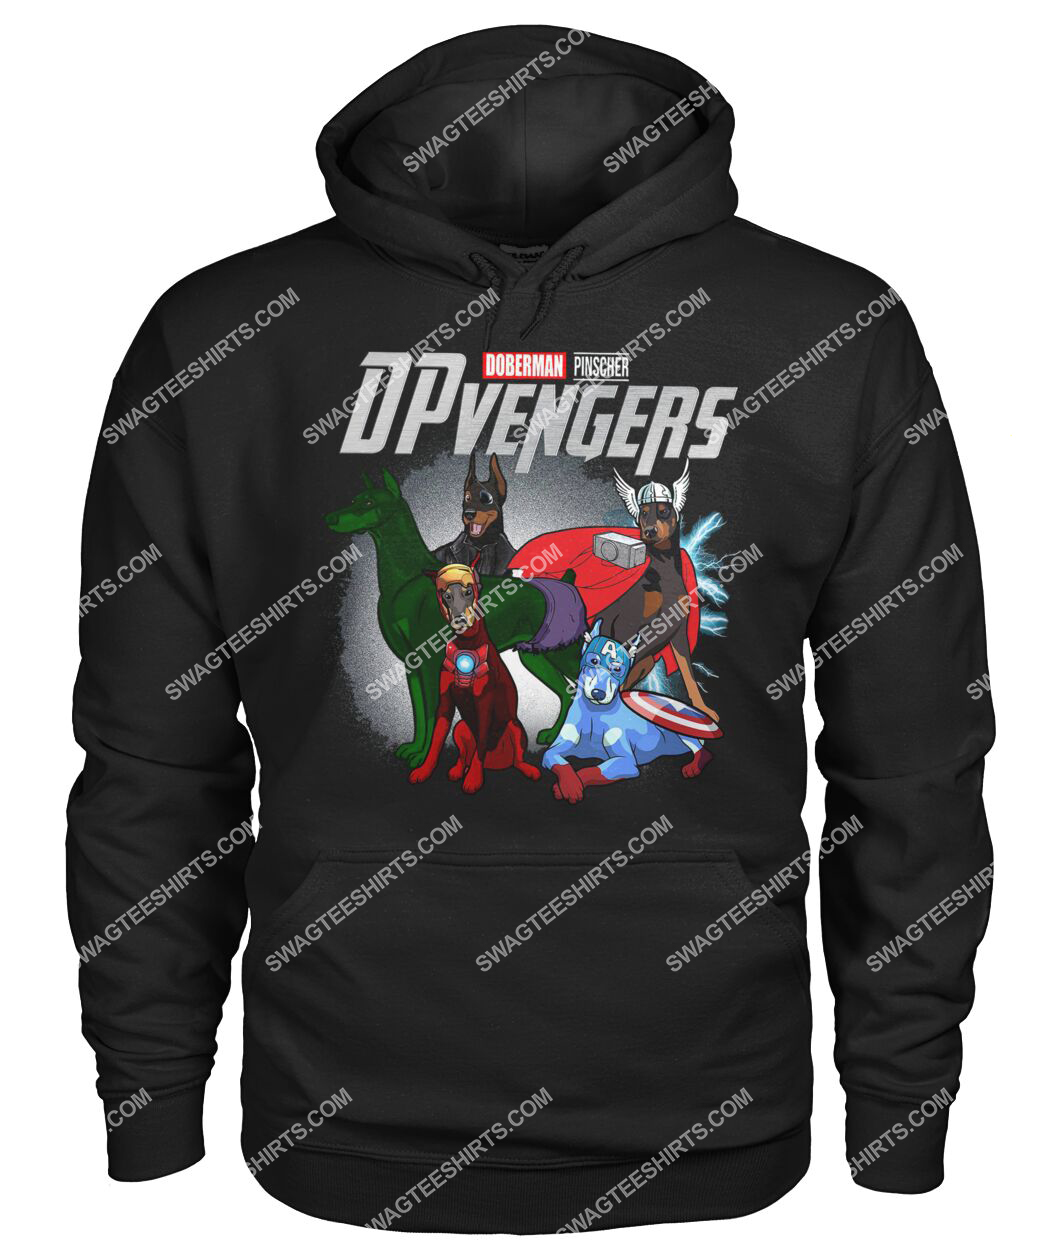 doberman pinscher dpvengers marvel avengers dogs lover hoodie 1